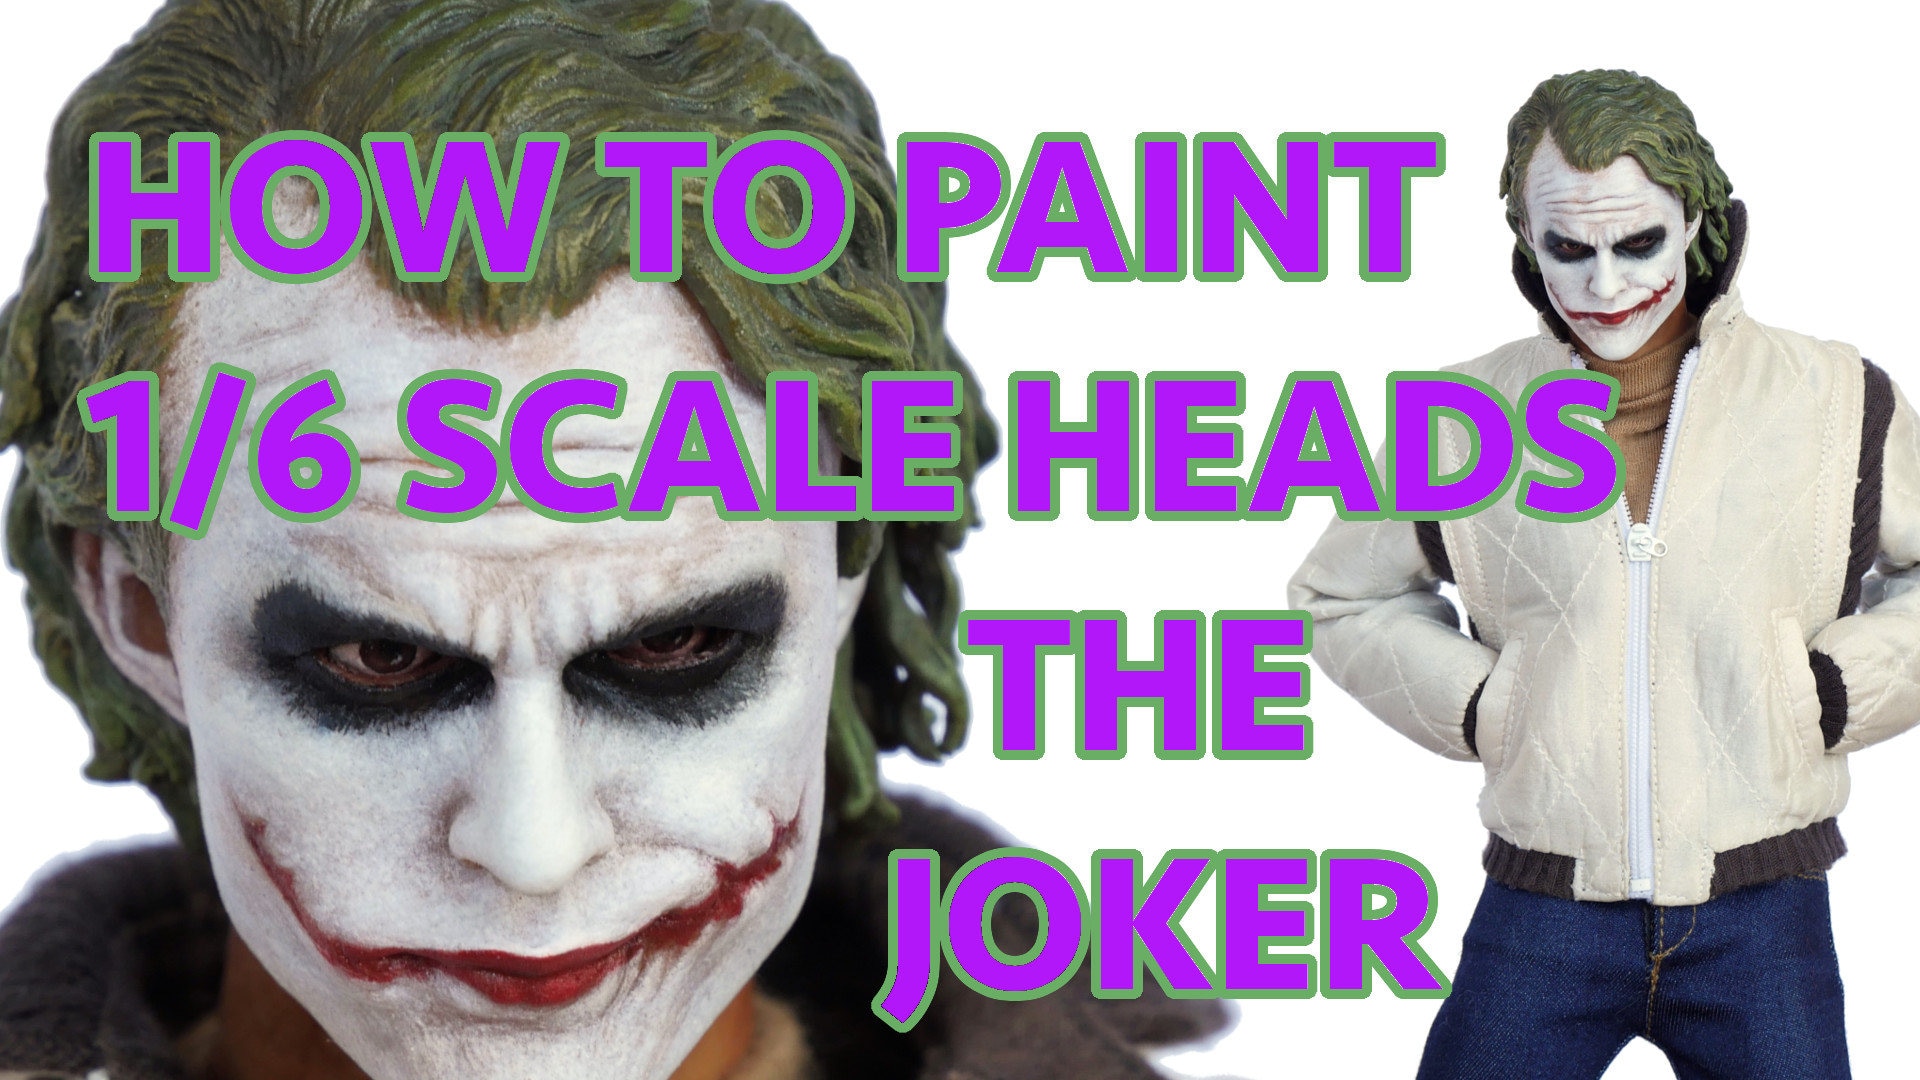 Heath Ledger JOKER 1/6 The Dark Knight Head Carving Model Accessory